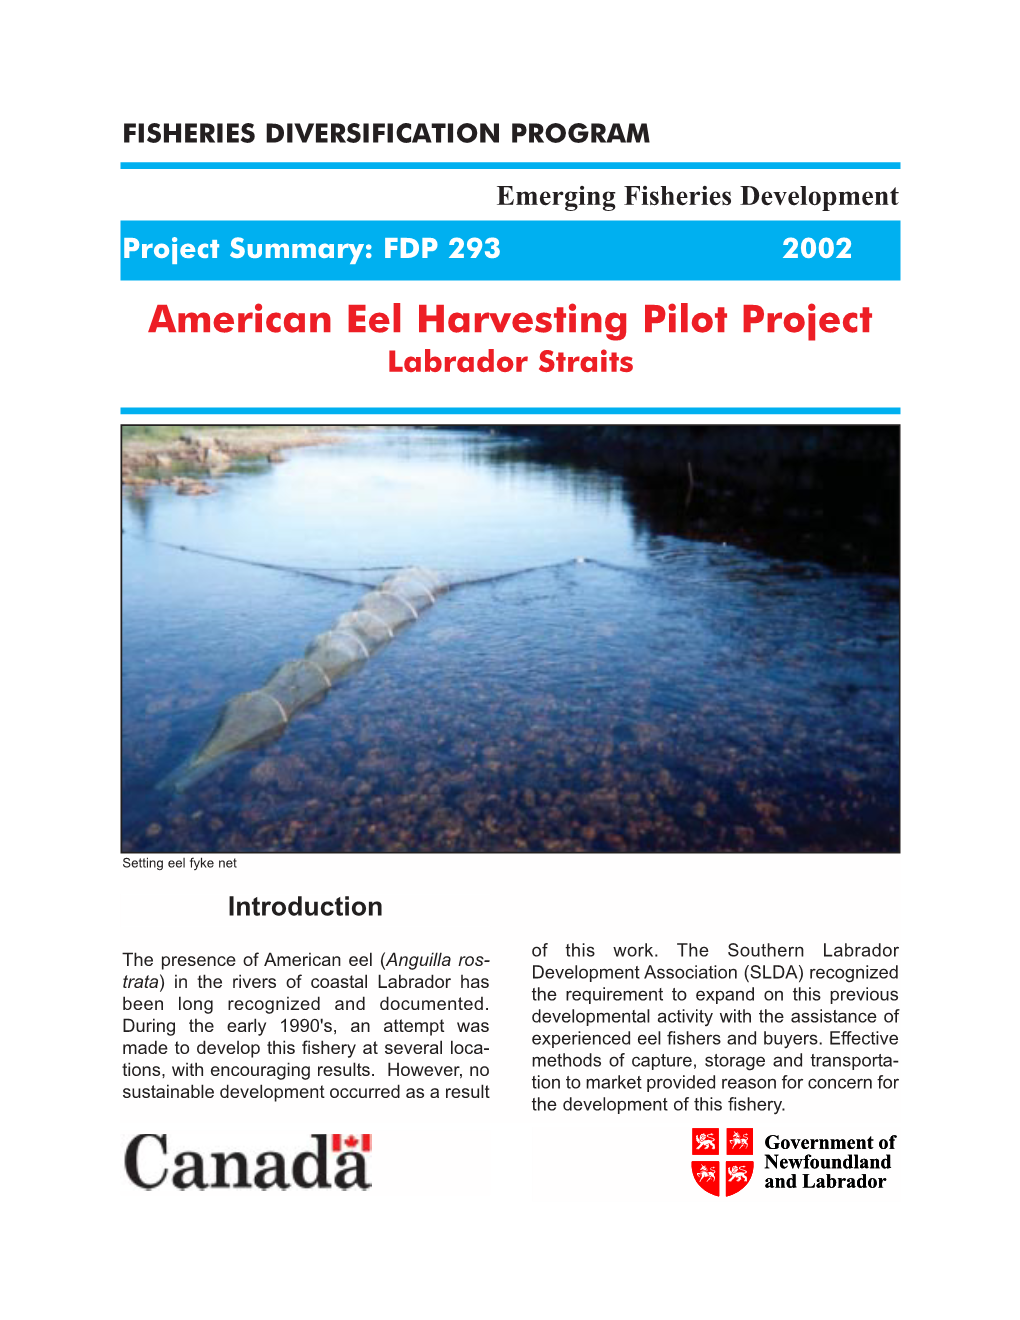 American Eel Harvesting Pilot Project Labrador Straits